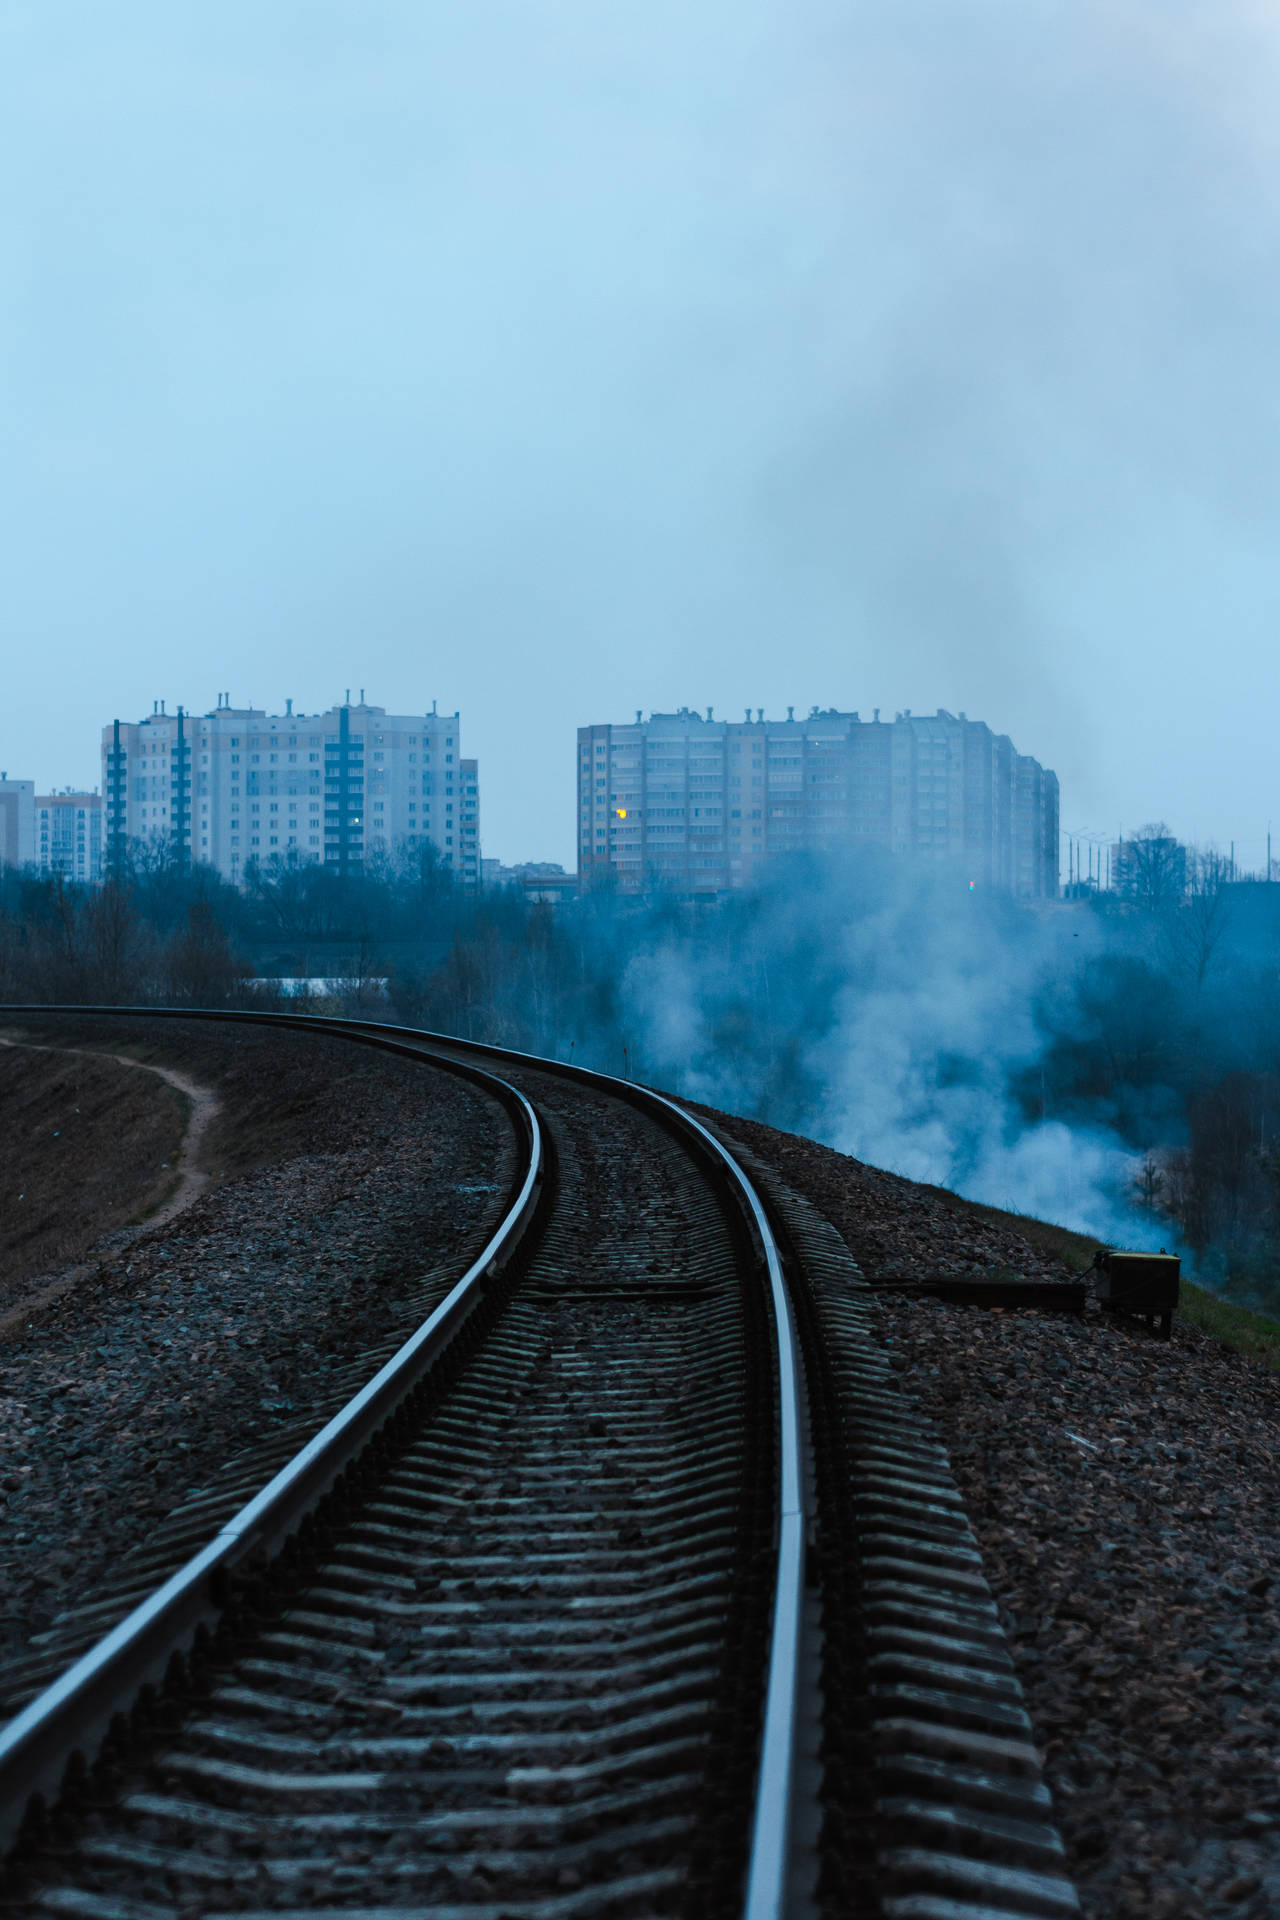 Train Tracks Smoke Hd Wallpaper